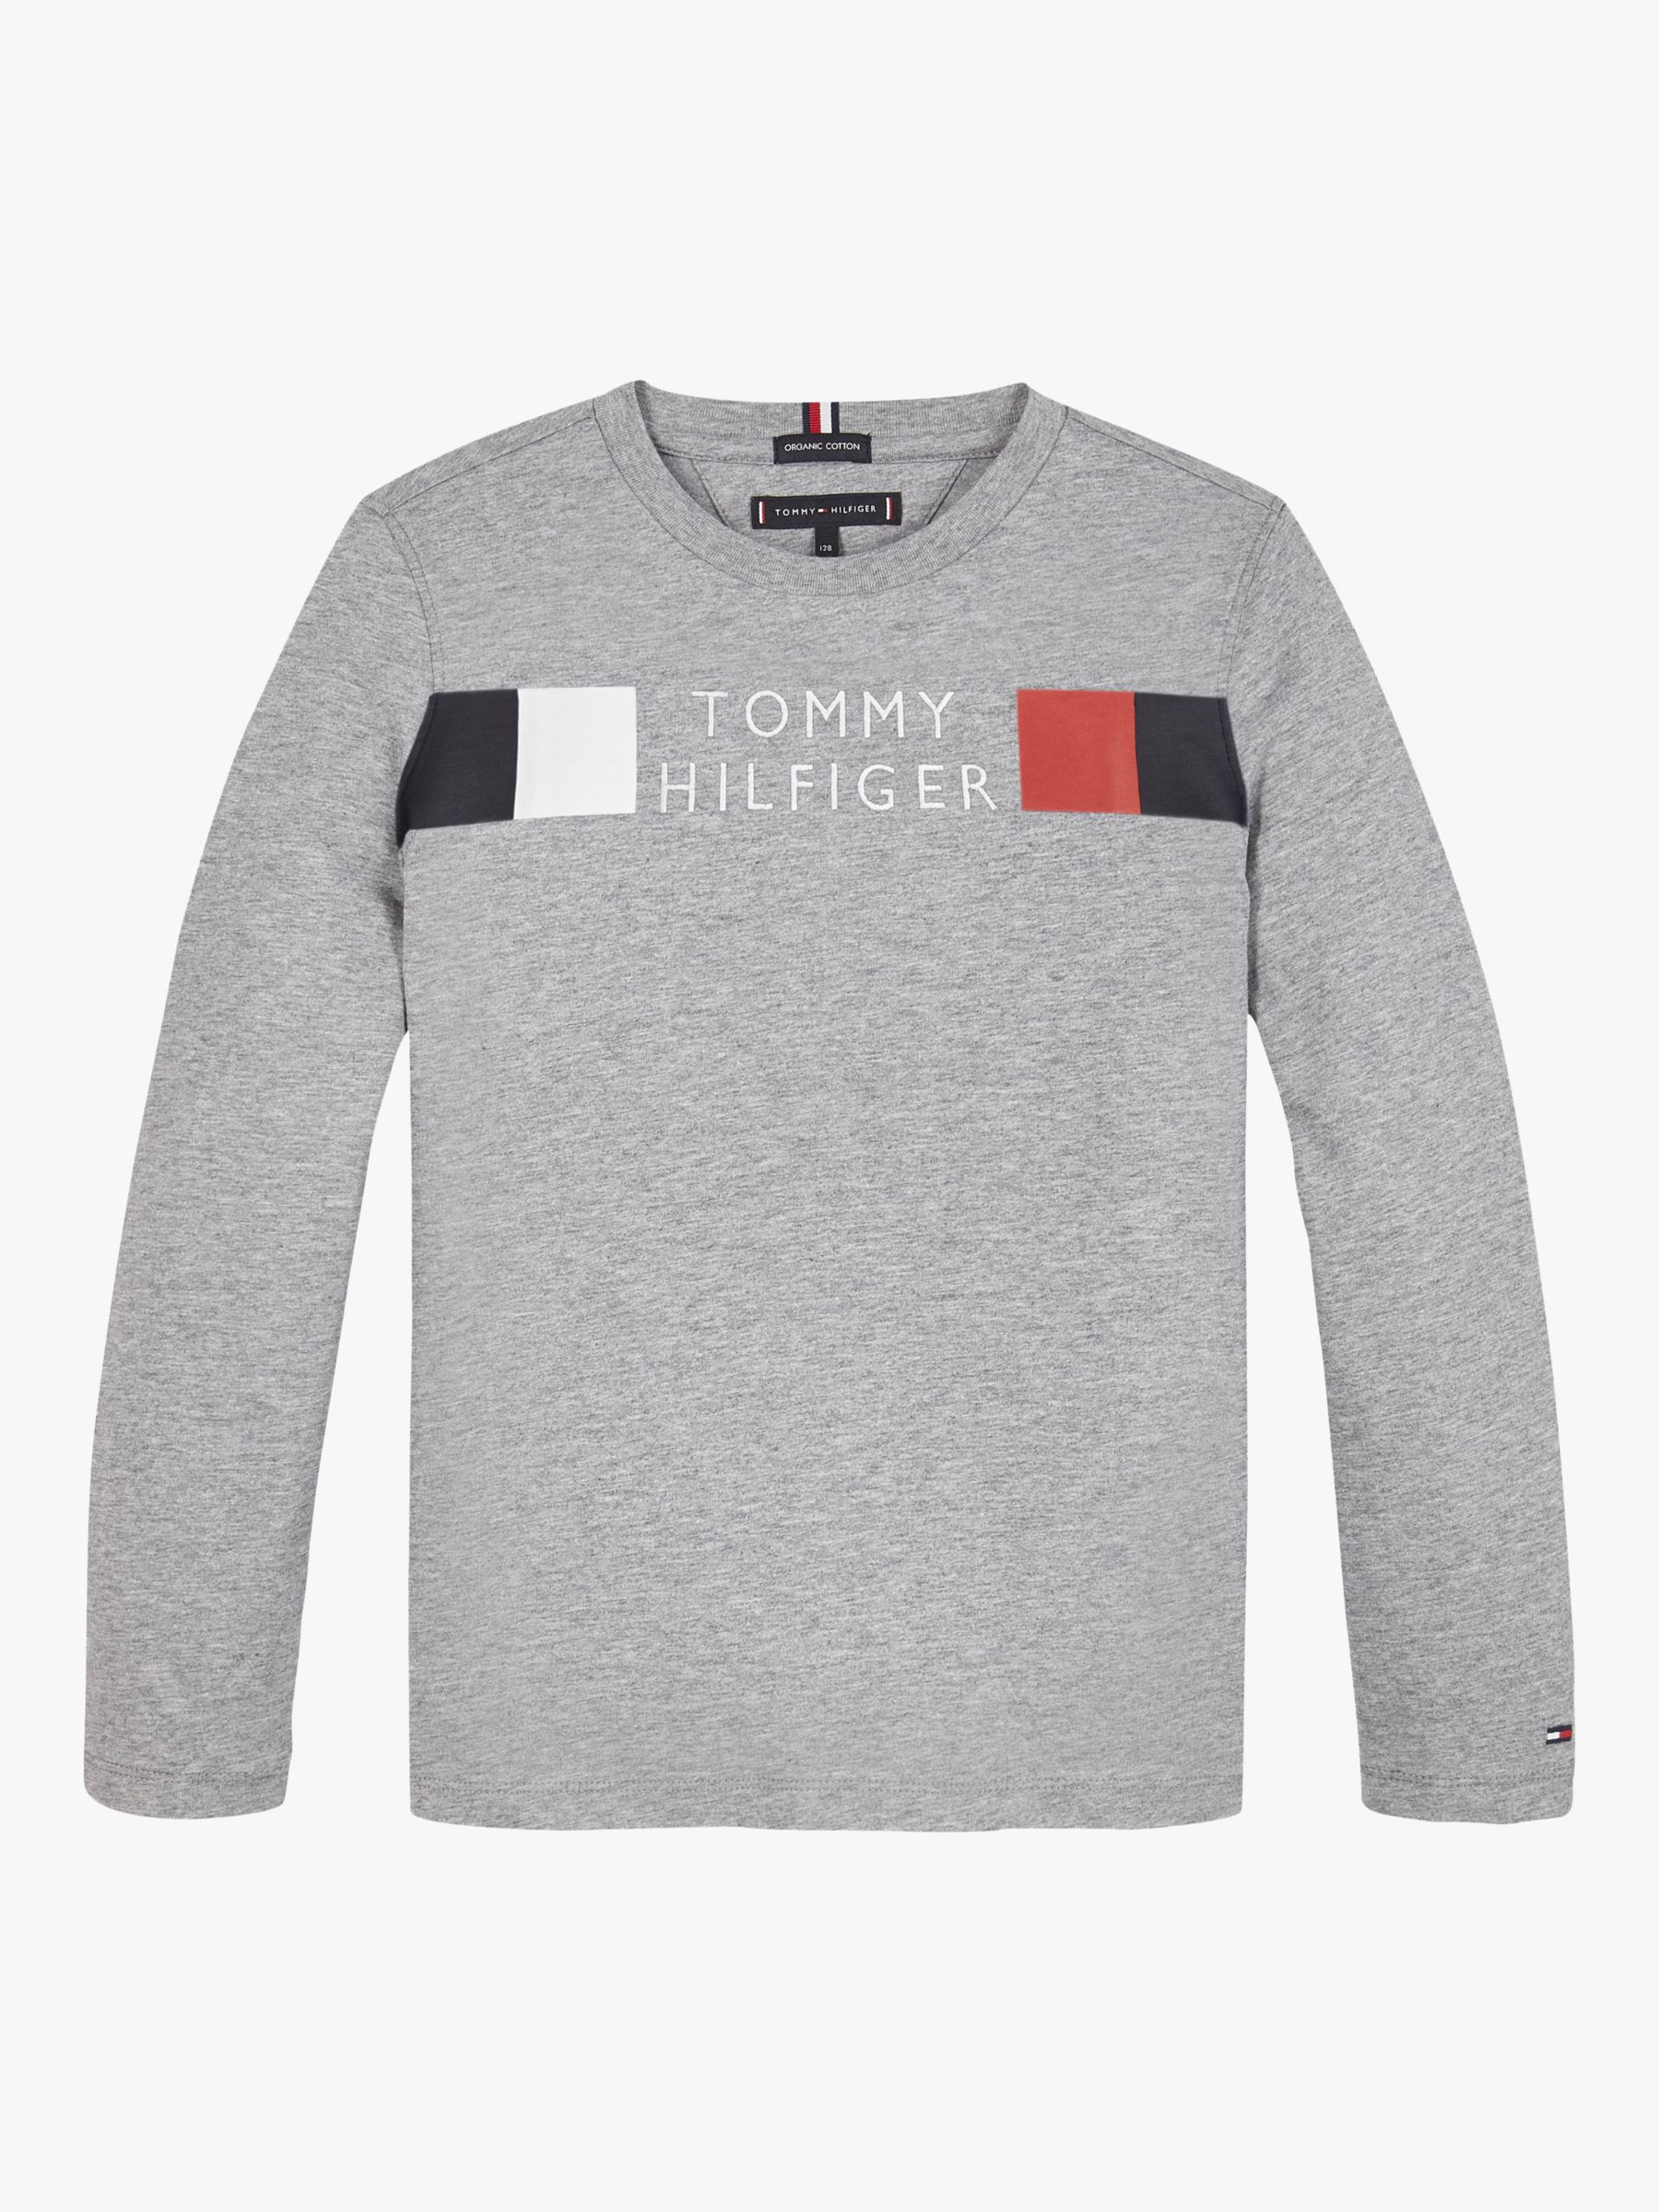 Image of Tommy Hilfiger Boys Stripe Logo Long Sleeve Cotton TShirt Mid Grey